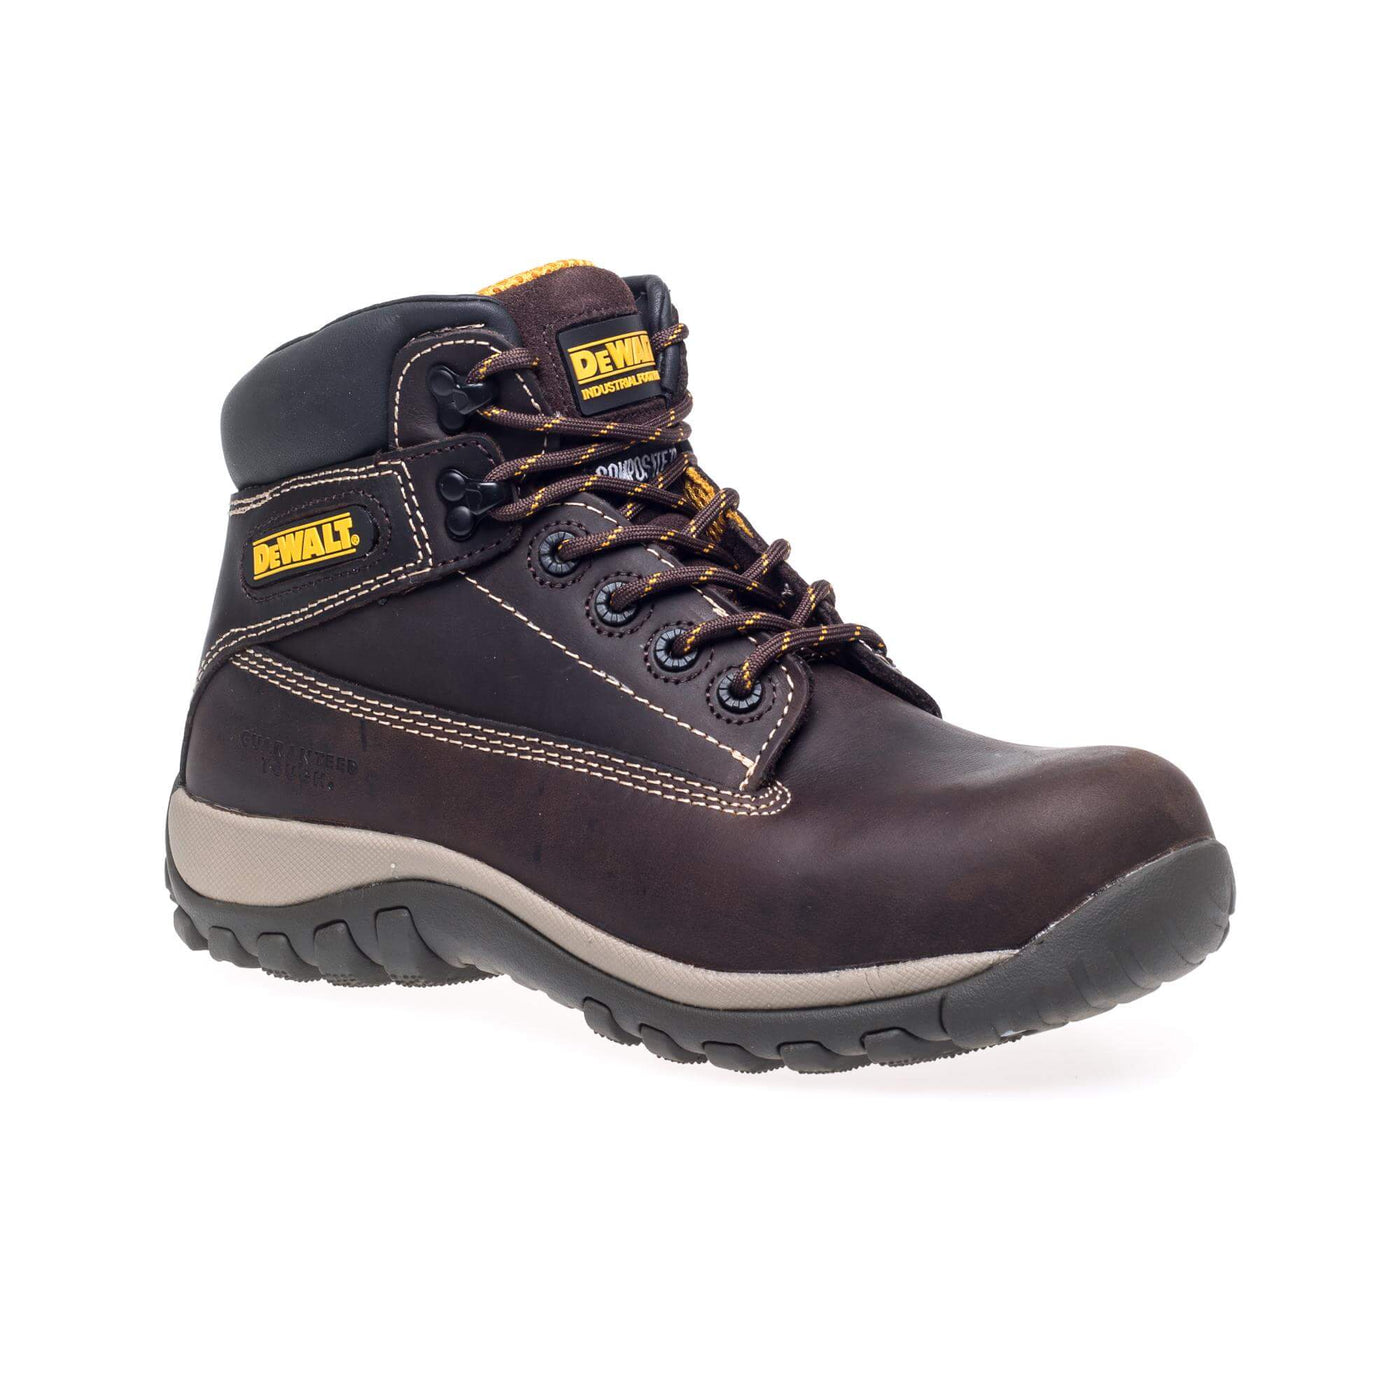 DeWalt Hammer Special Offer Pack - DeWalt Hammer Brown Metal-Free Safety Boots + 3 Pairs Work Socks